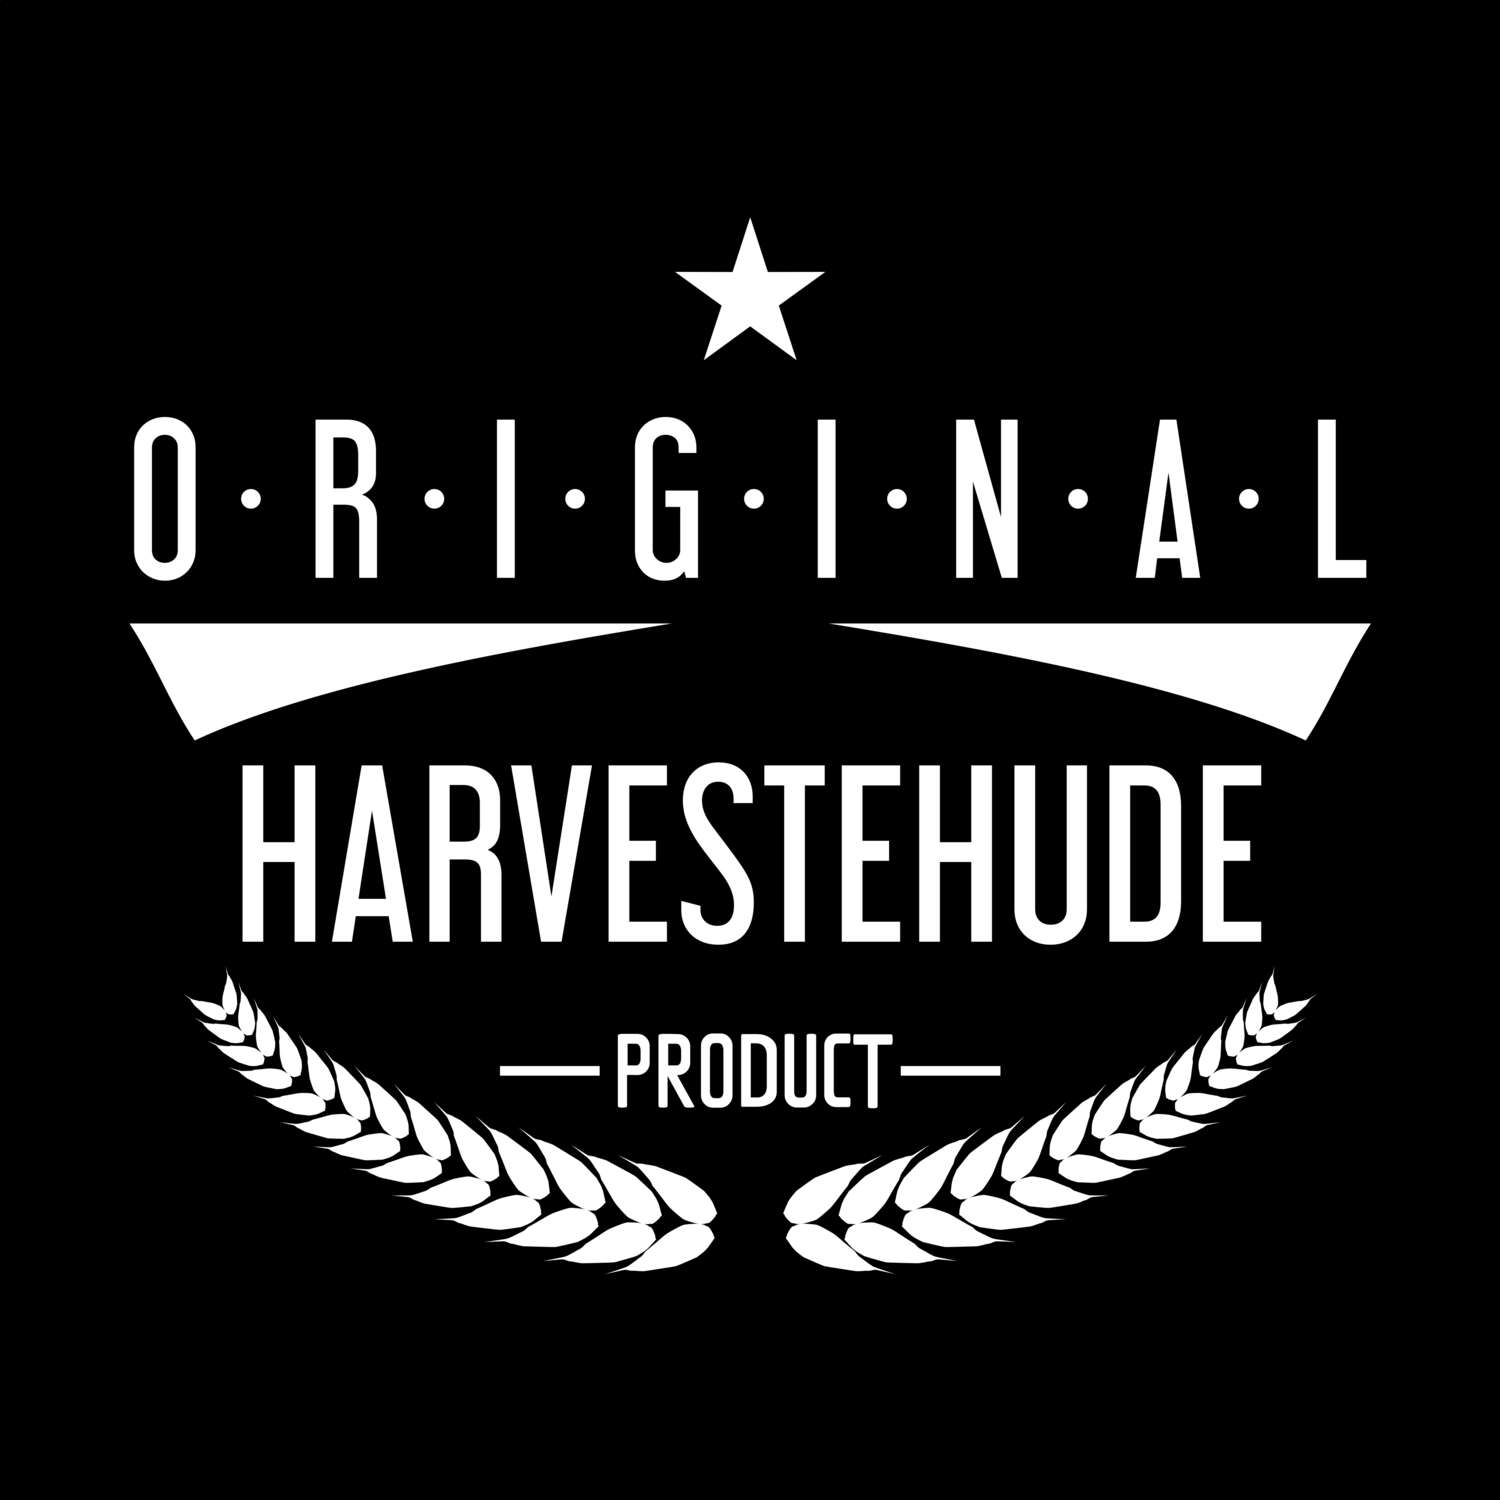 Harvestehude T-Shirt »Original Product«